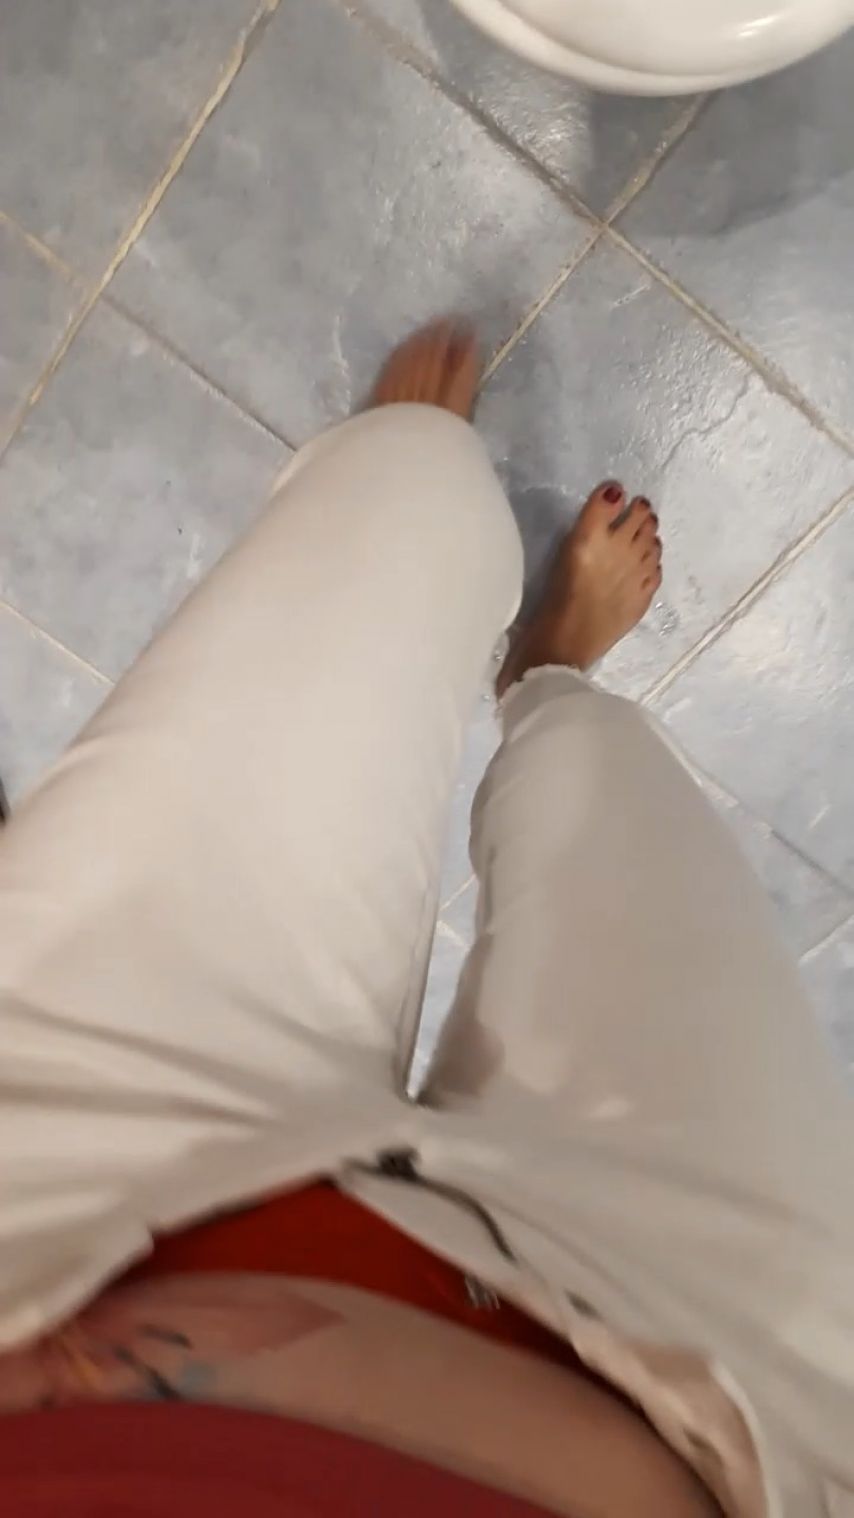 Pee desperation in white jeans